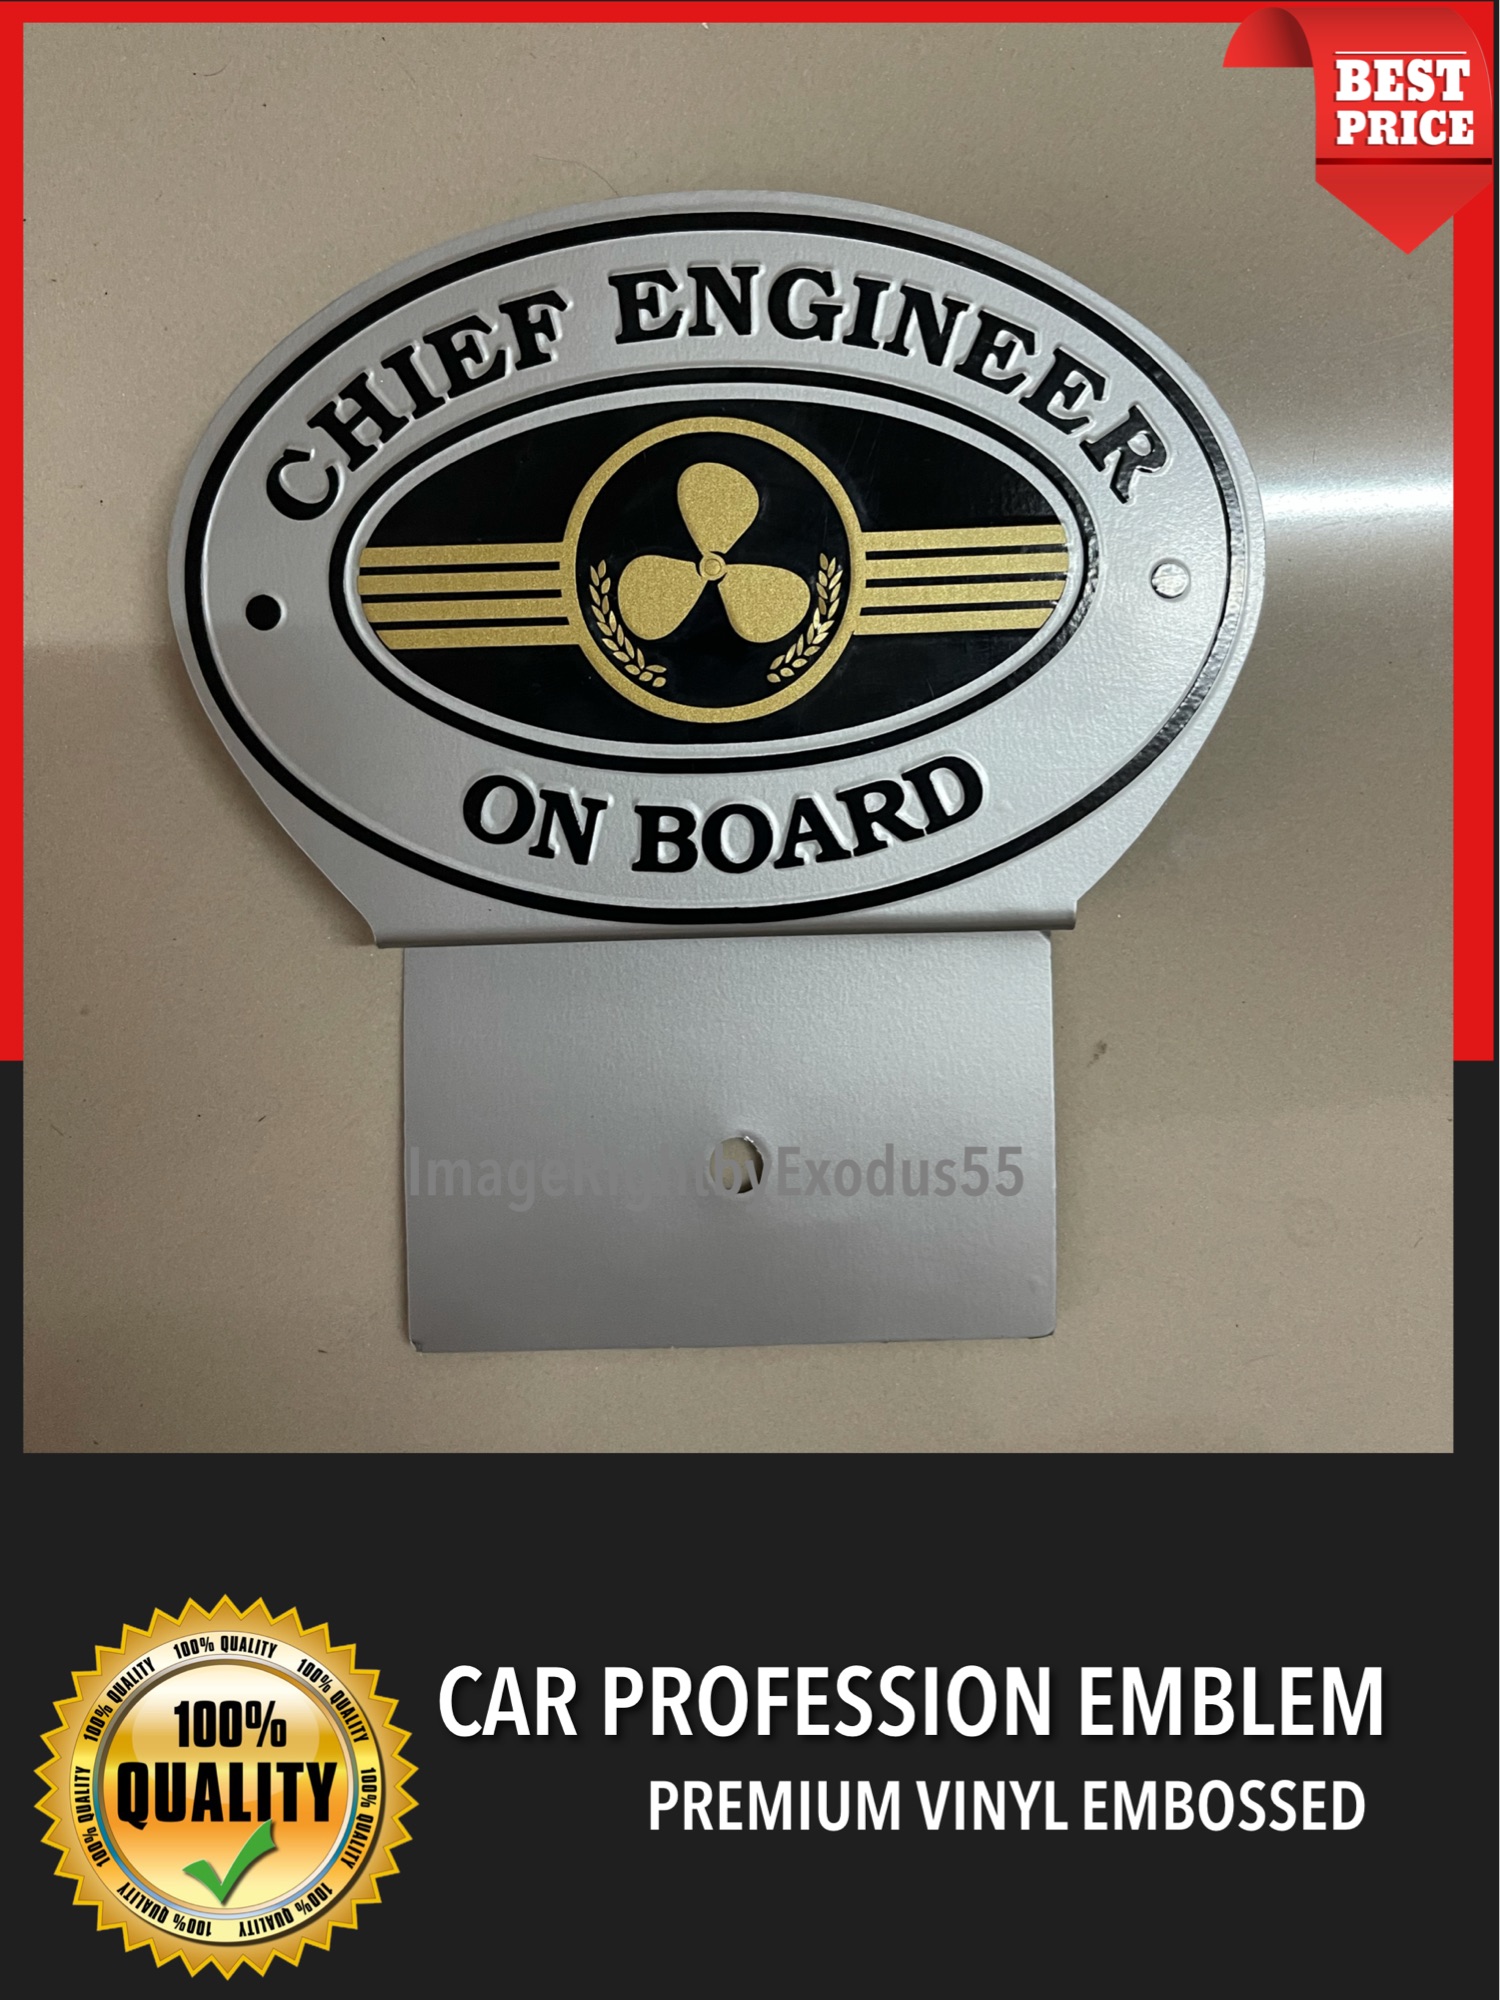 isee360 Engineer Inside Hood, Bumper, Sides, Windows Car Sticker Decal  (Red) : Amazon.in: Car & Motorbike